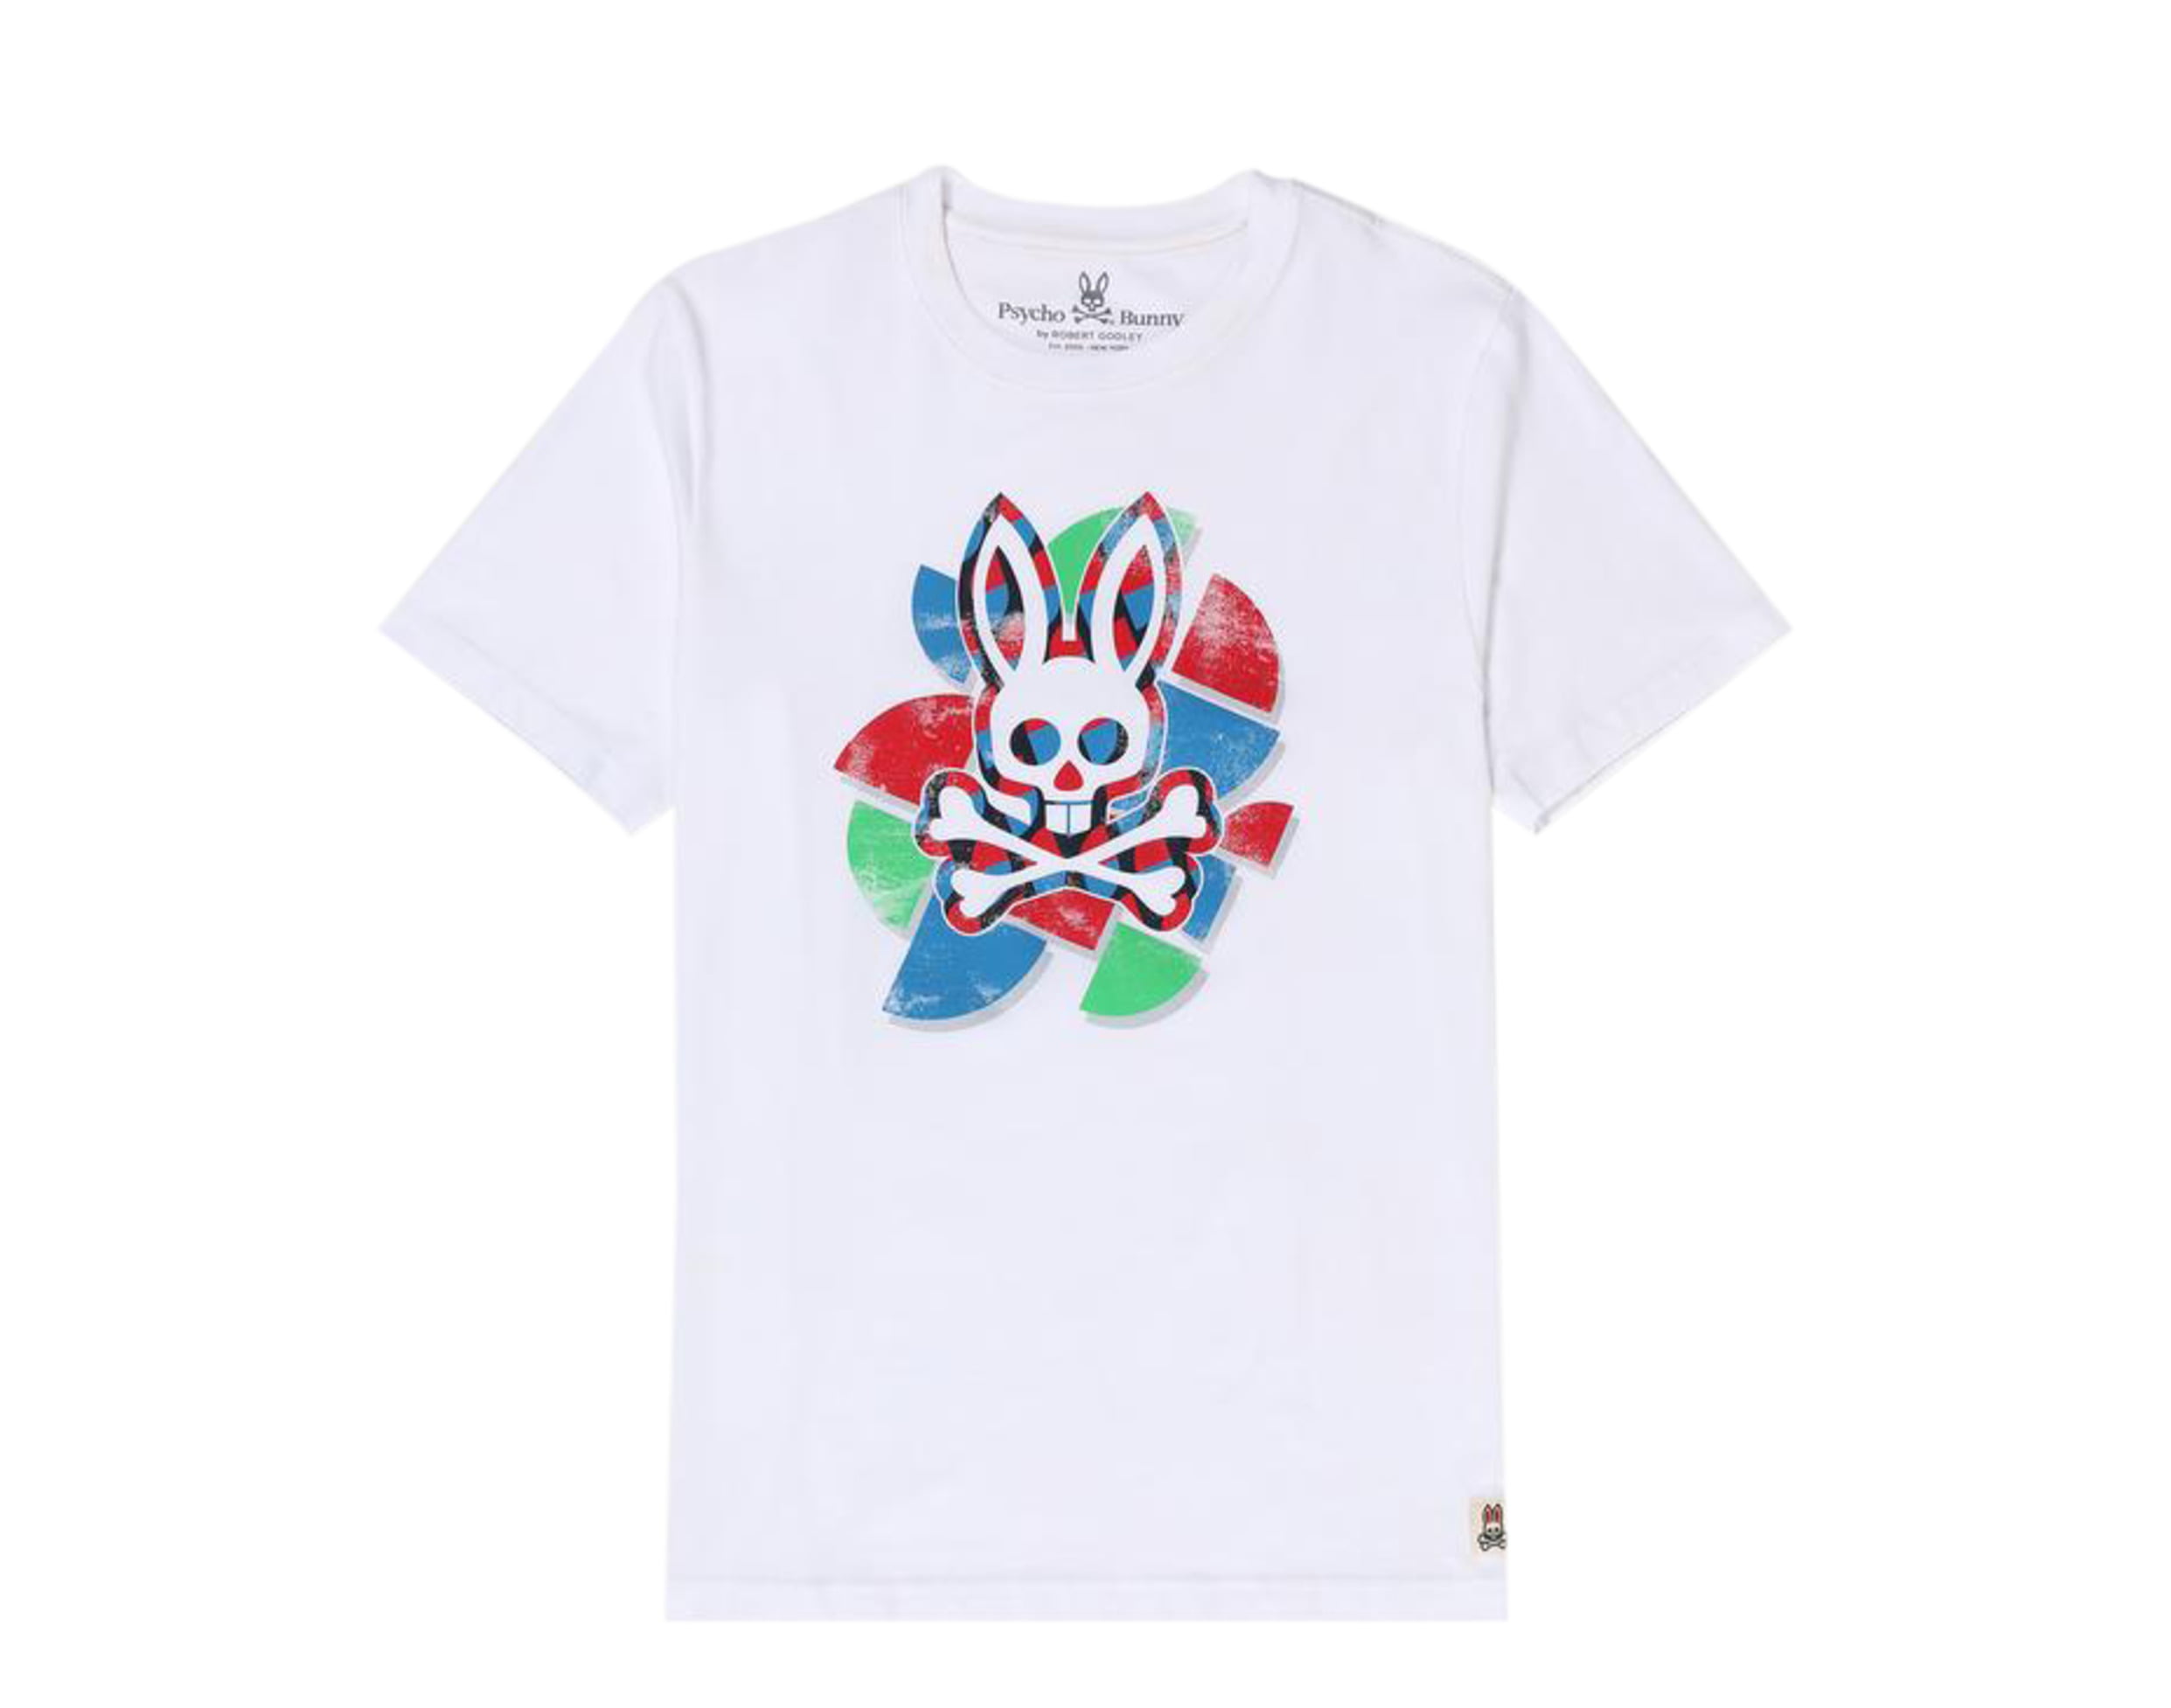 Psycho Bunny Albion Graphic White/Multi Men's Tee Shirt - Walmart